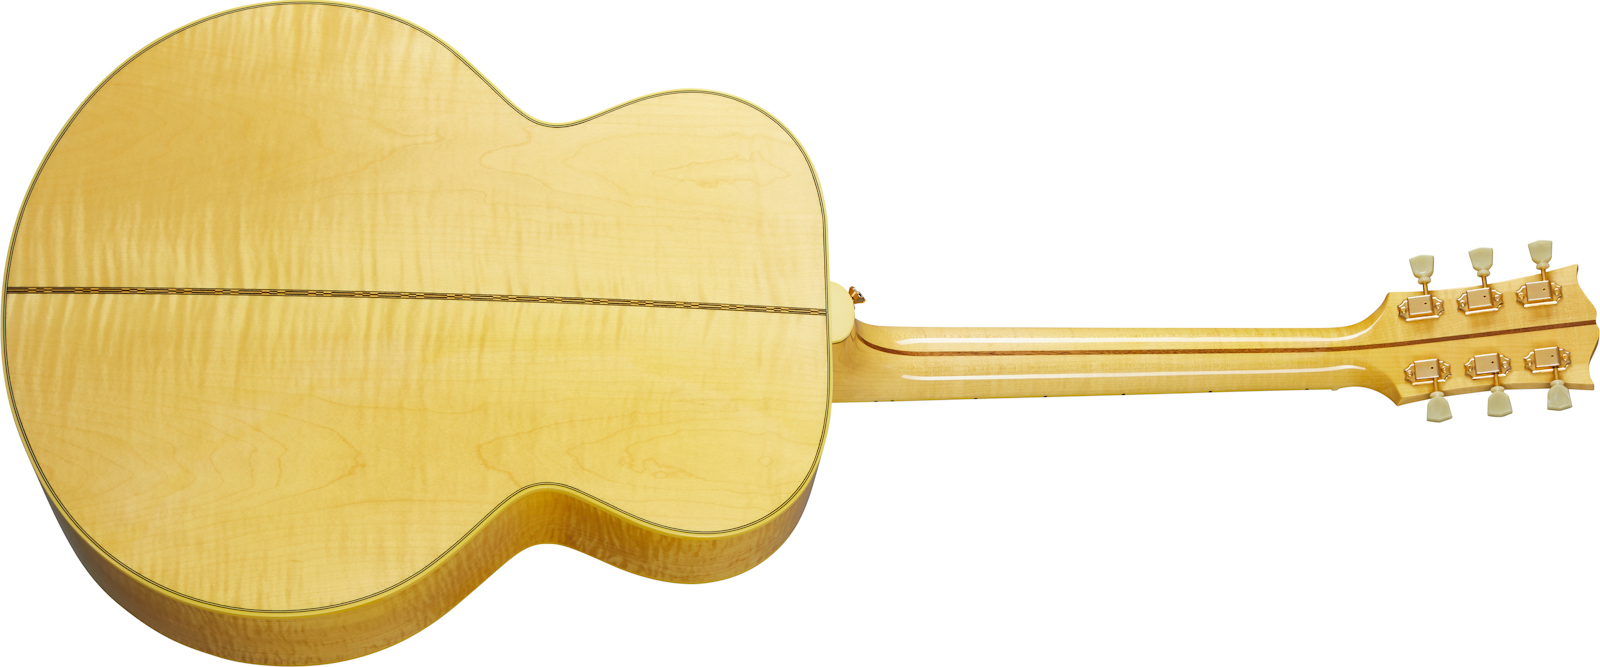 Gibson Sj-200 Original 2020 Super Jumbo Epicea Erable Rw - Antique Natural - Elektroakustische Gitarre - Variation 1